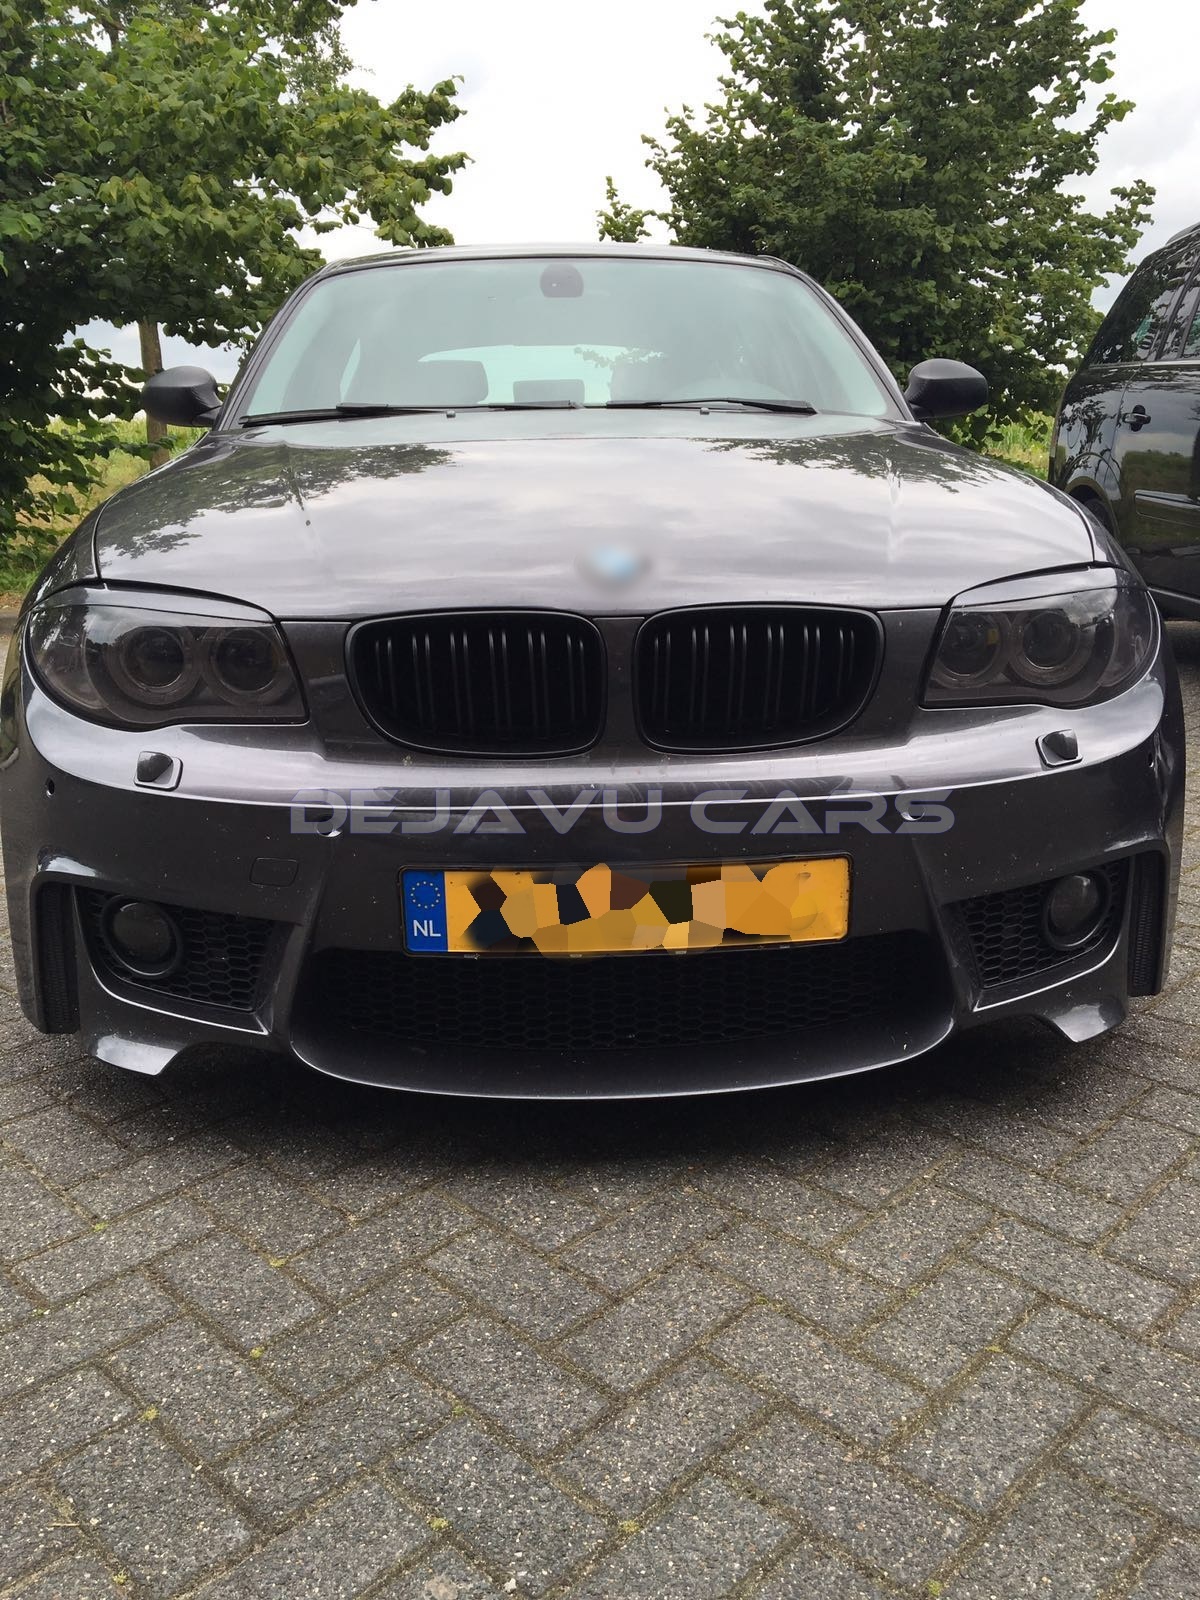 frontbumper in sport-design approprié pour BMW série 1 E81, E82